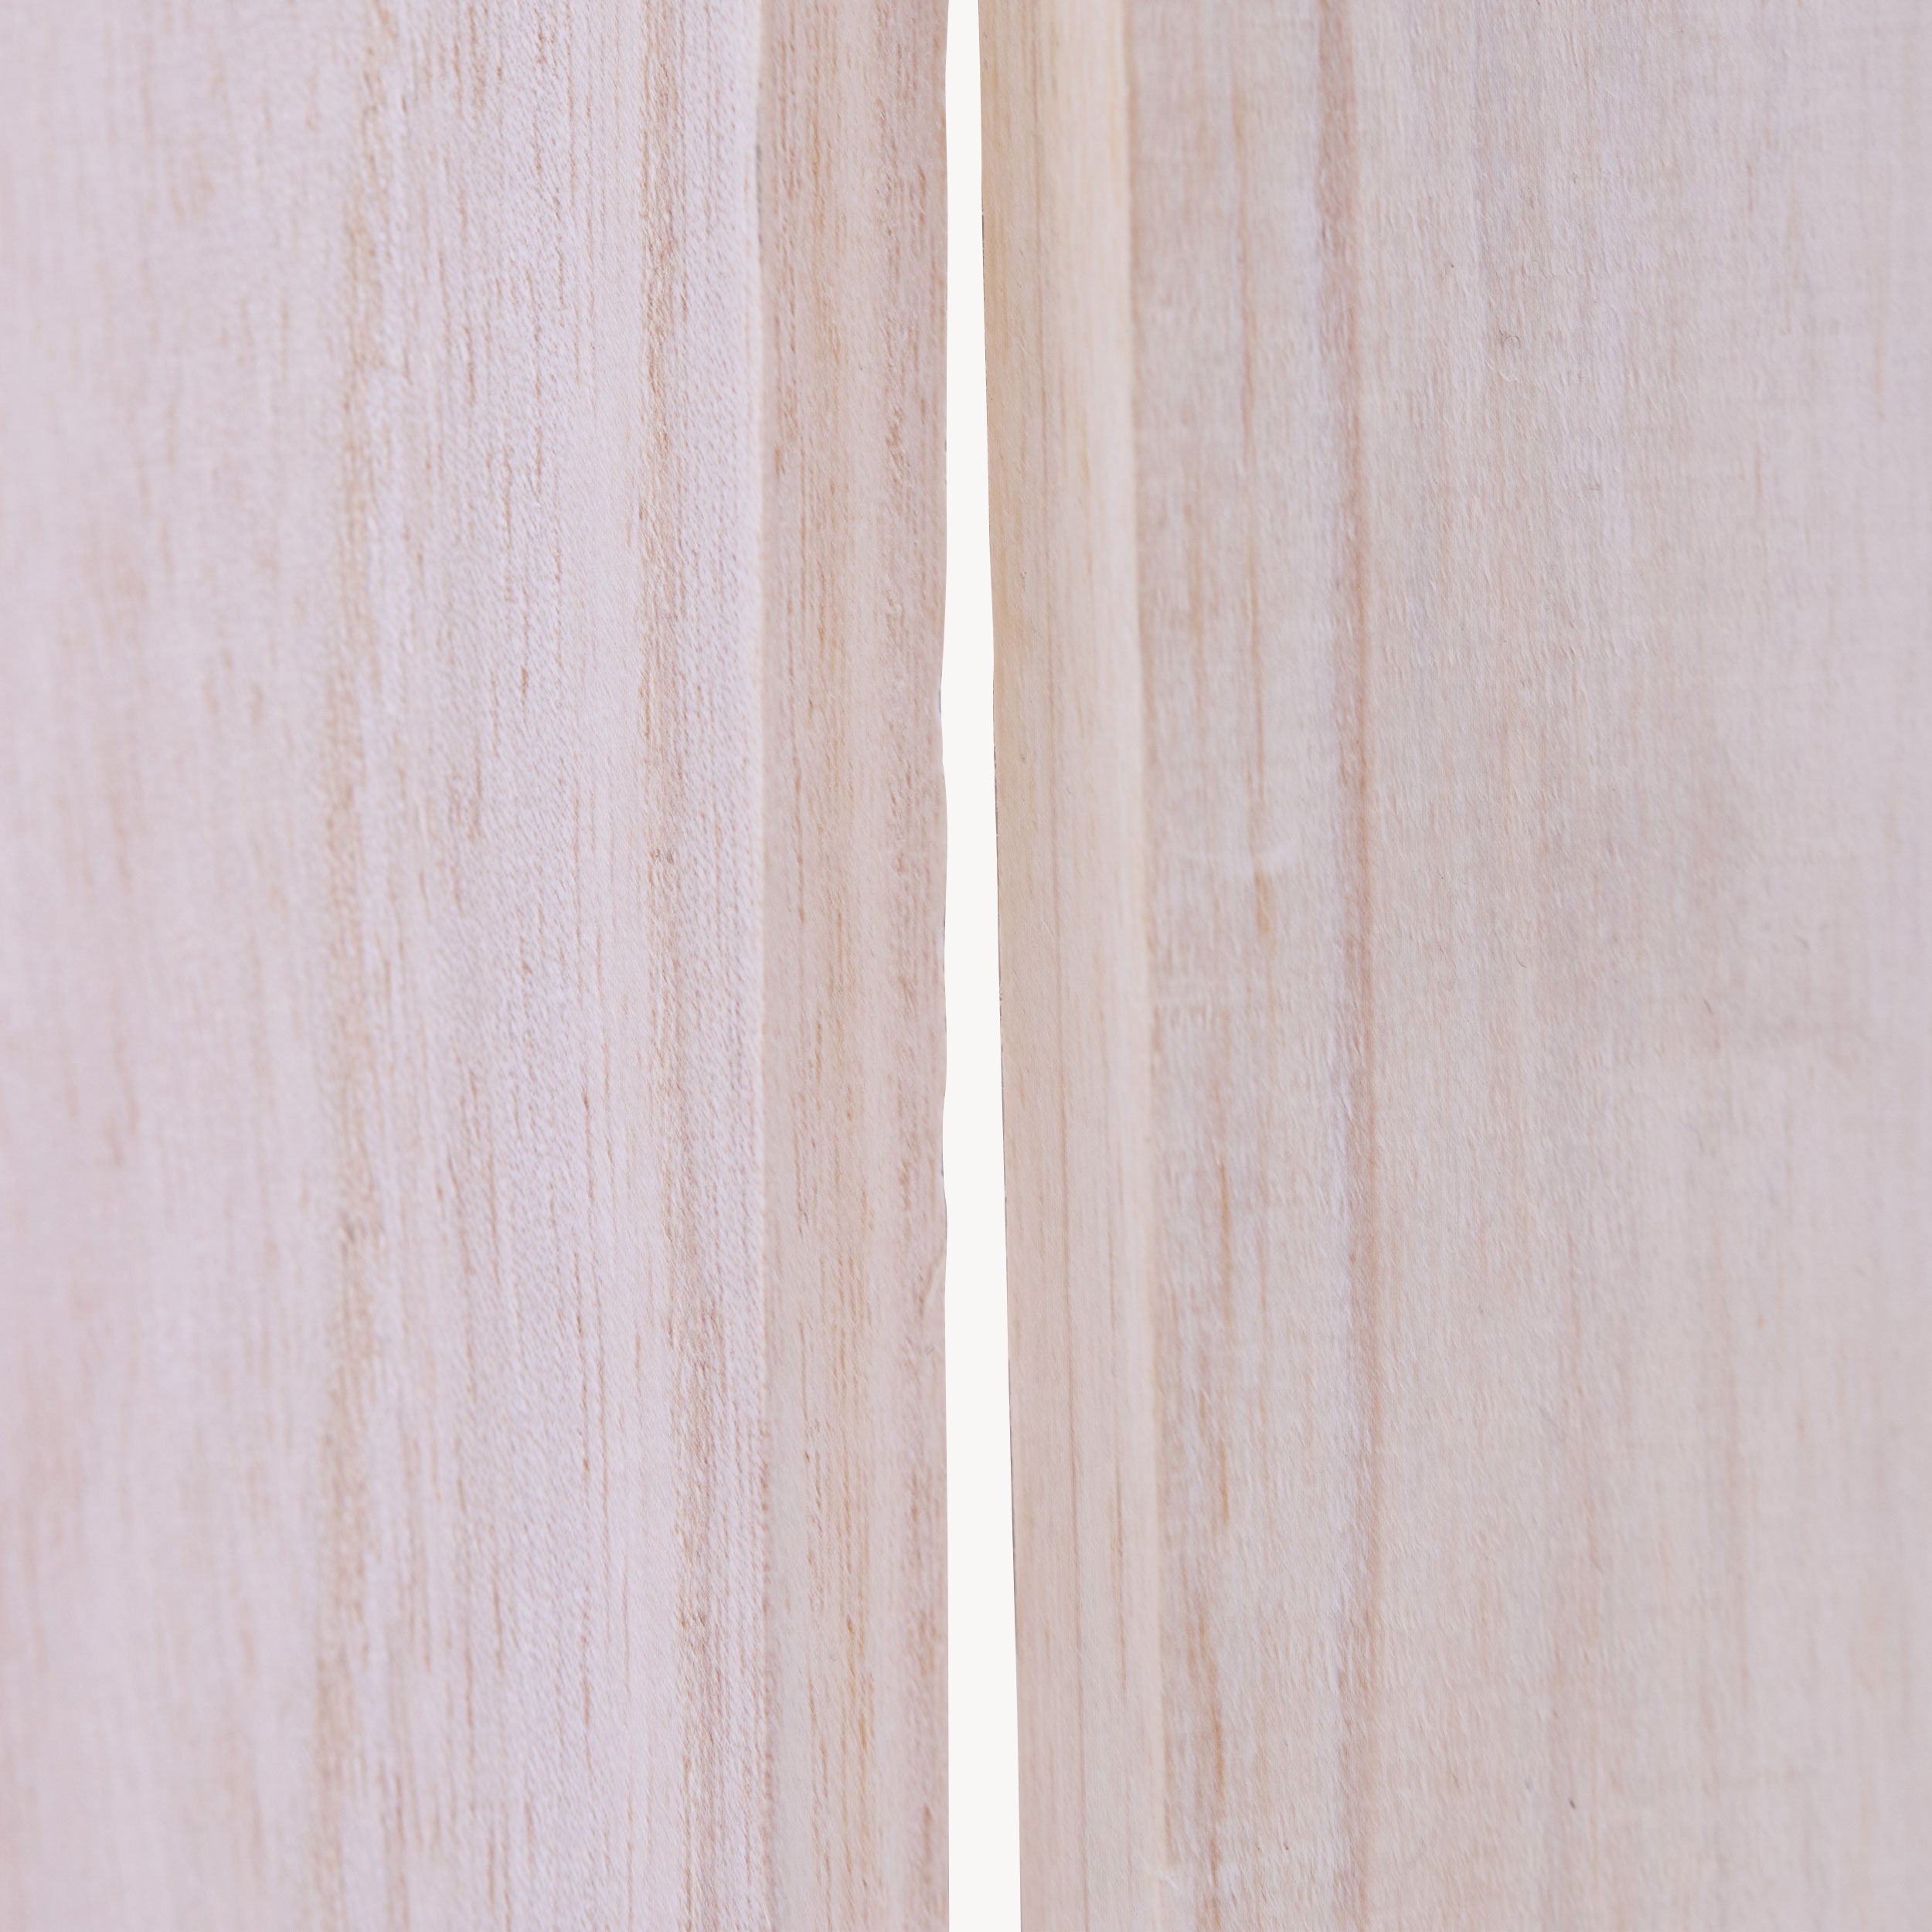 close up of wood grain